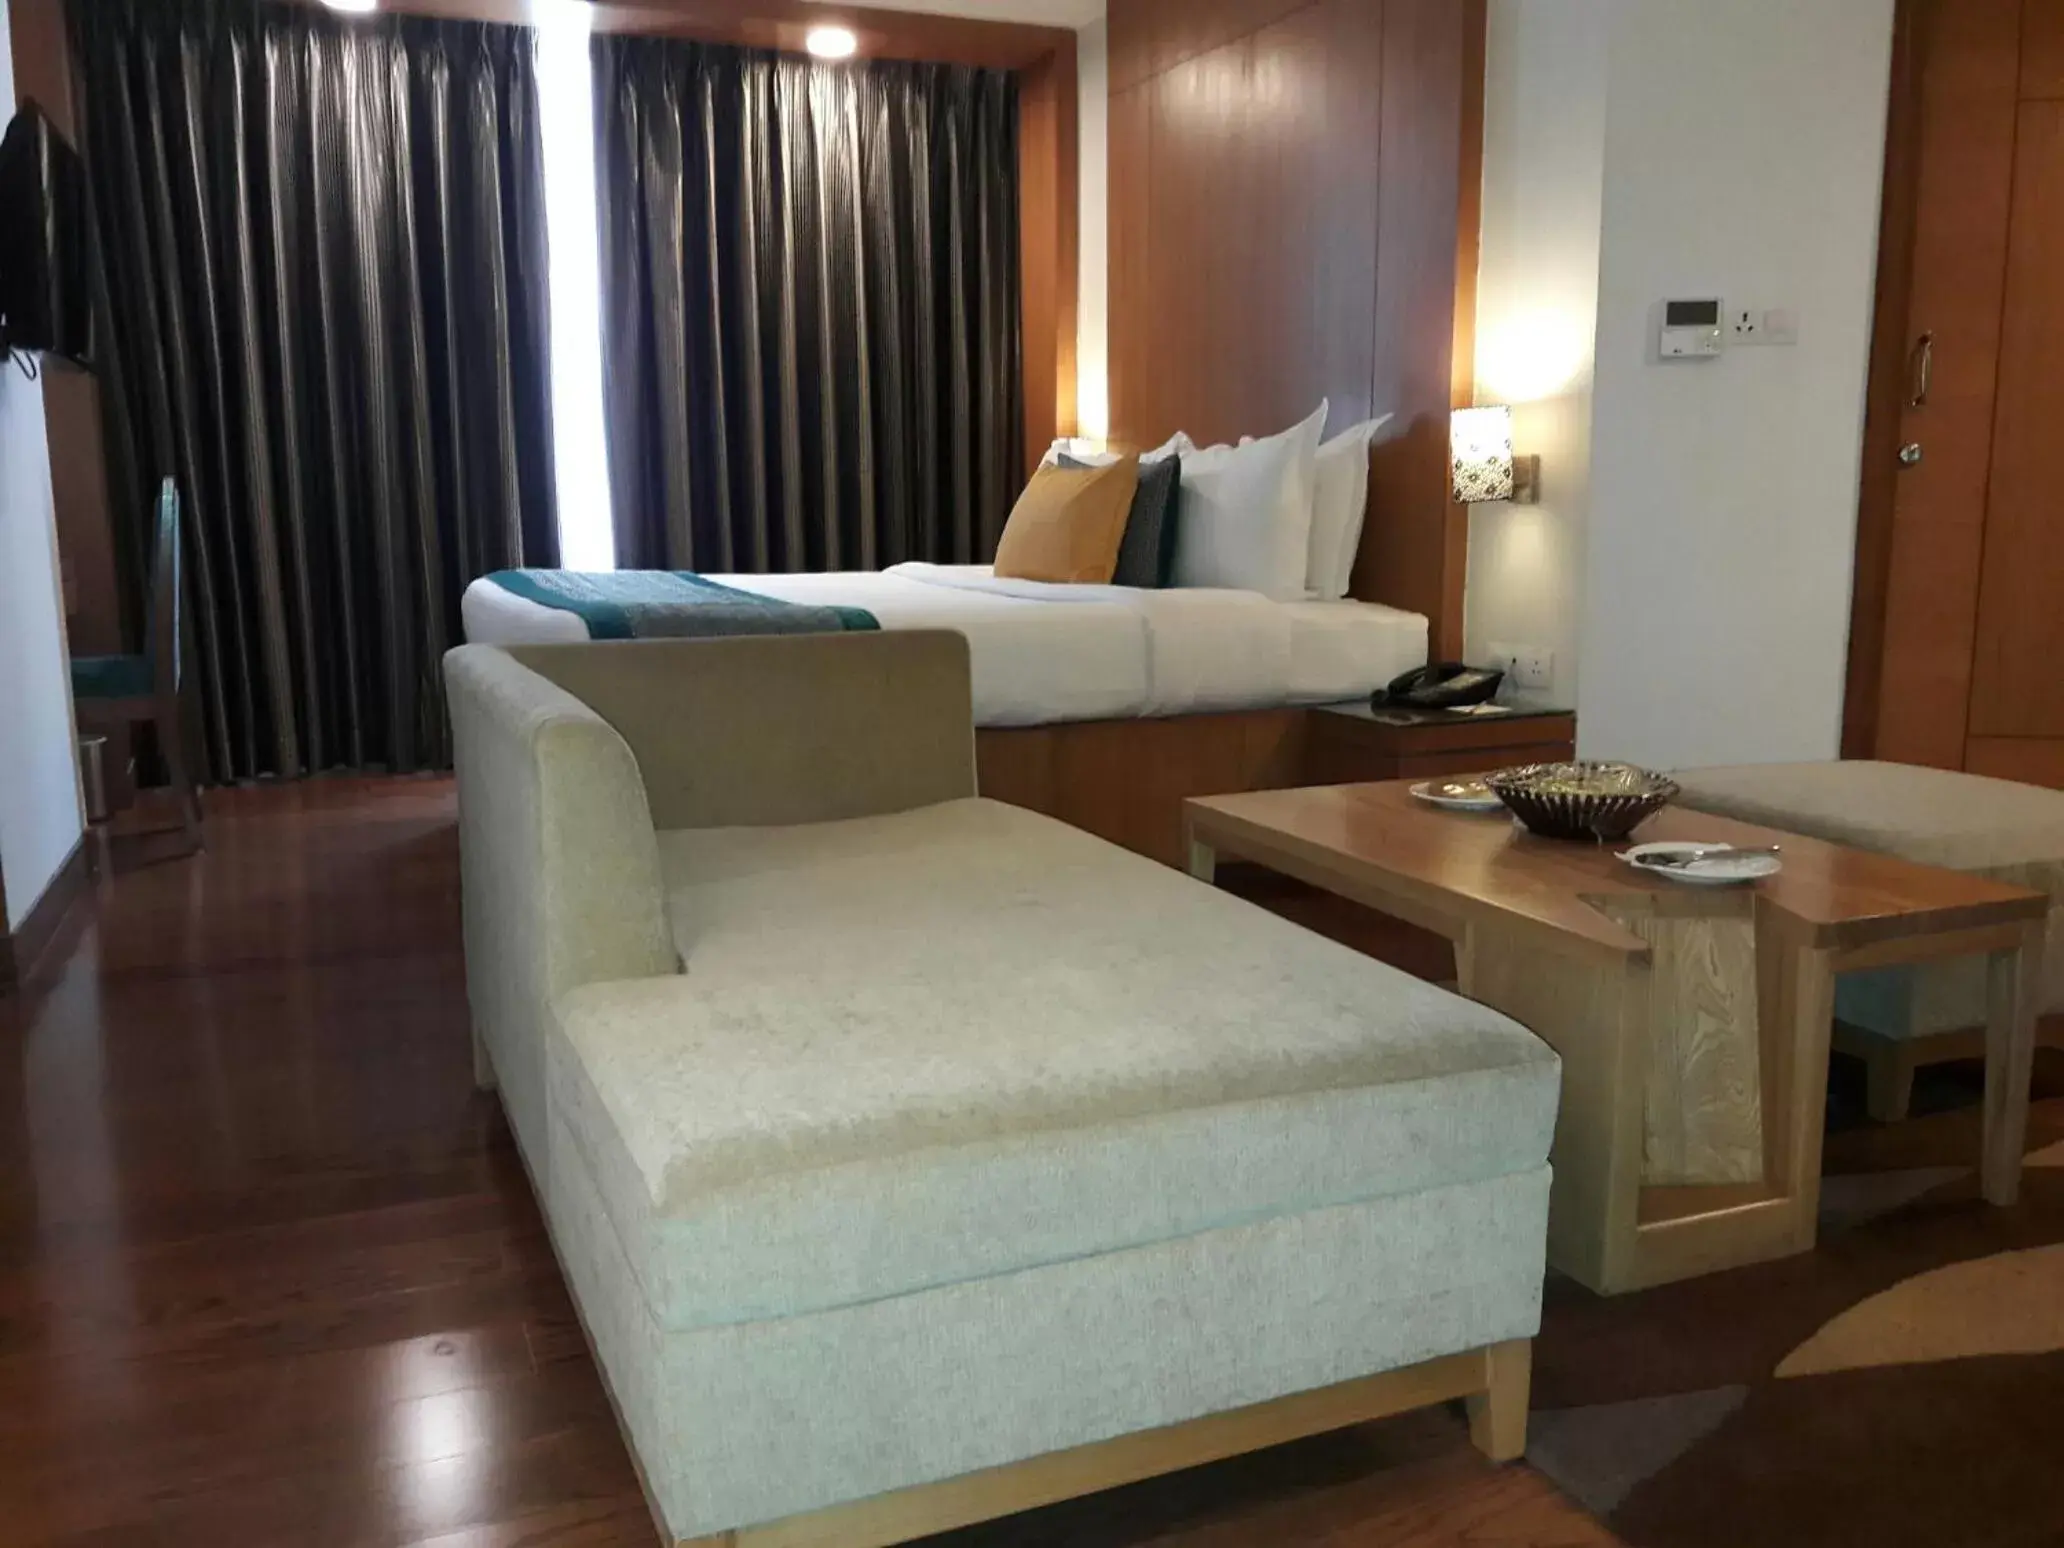 Bedroom, Room Photo in Lemon Tree Hotel, Dehradun